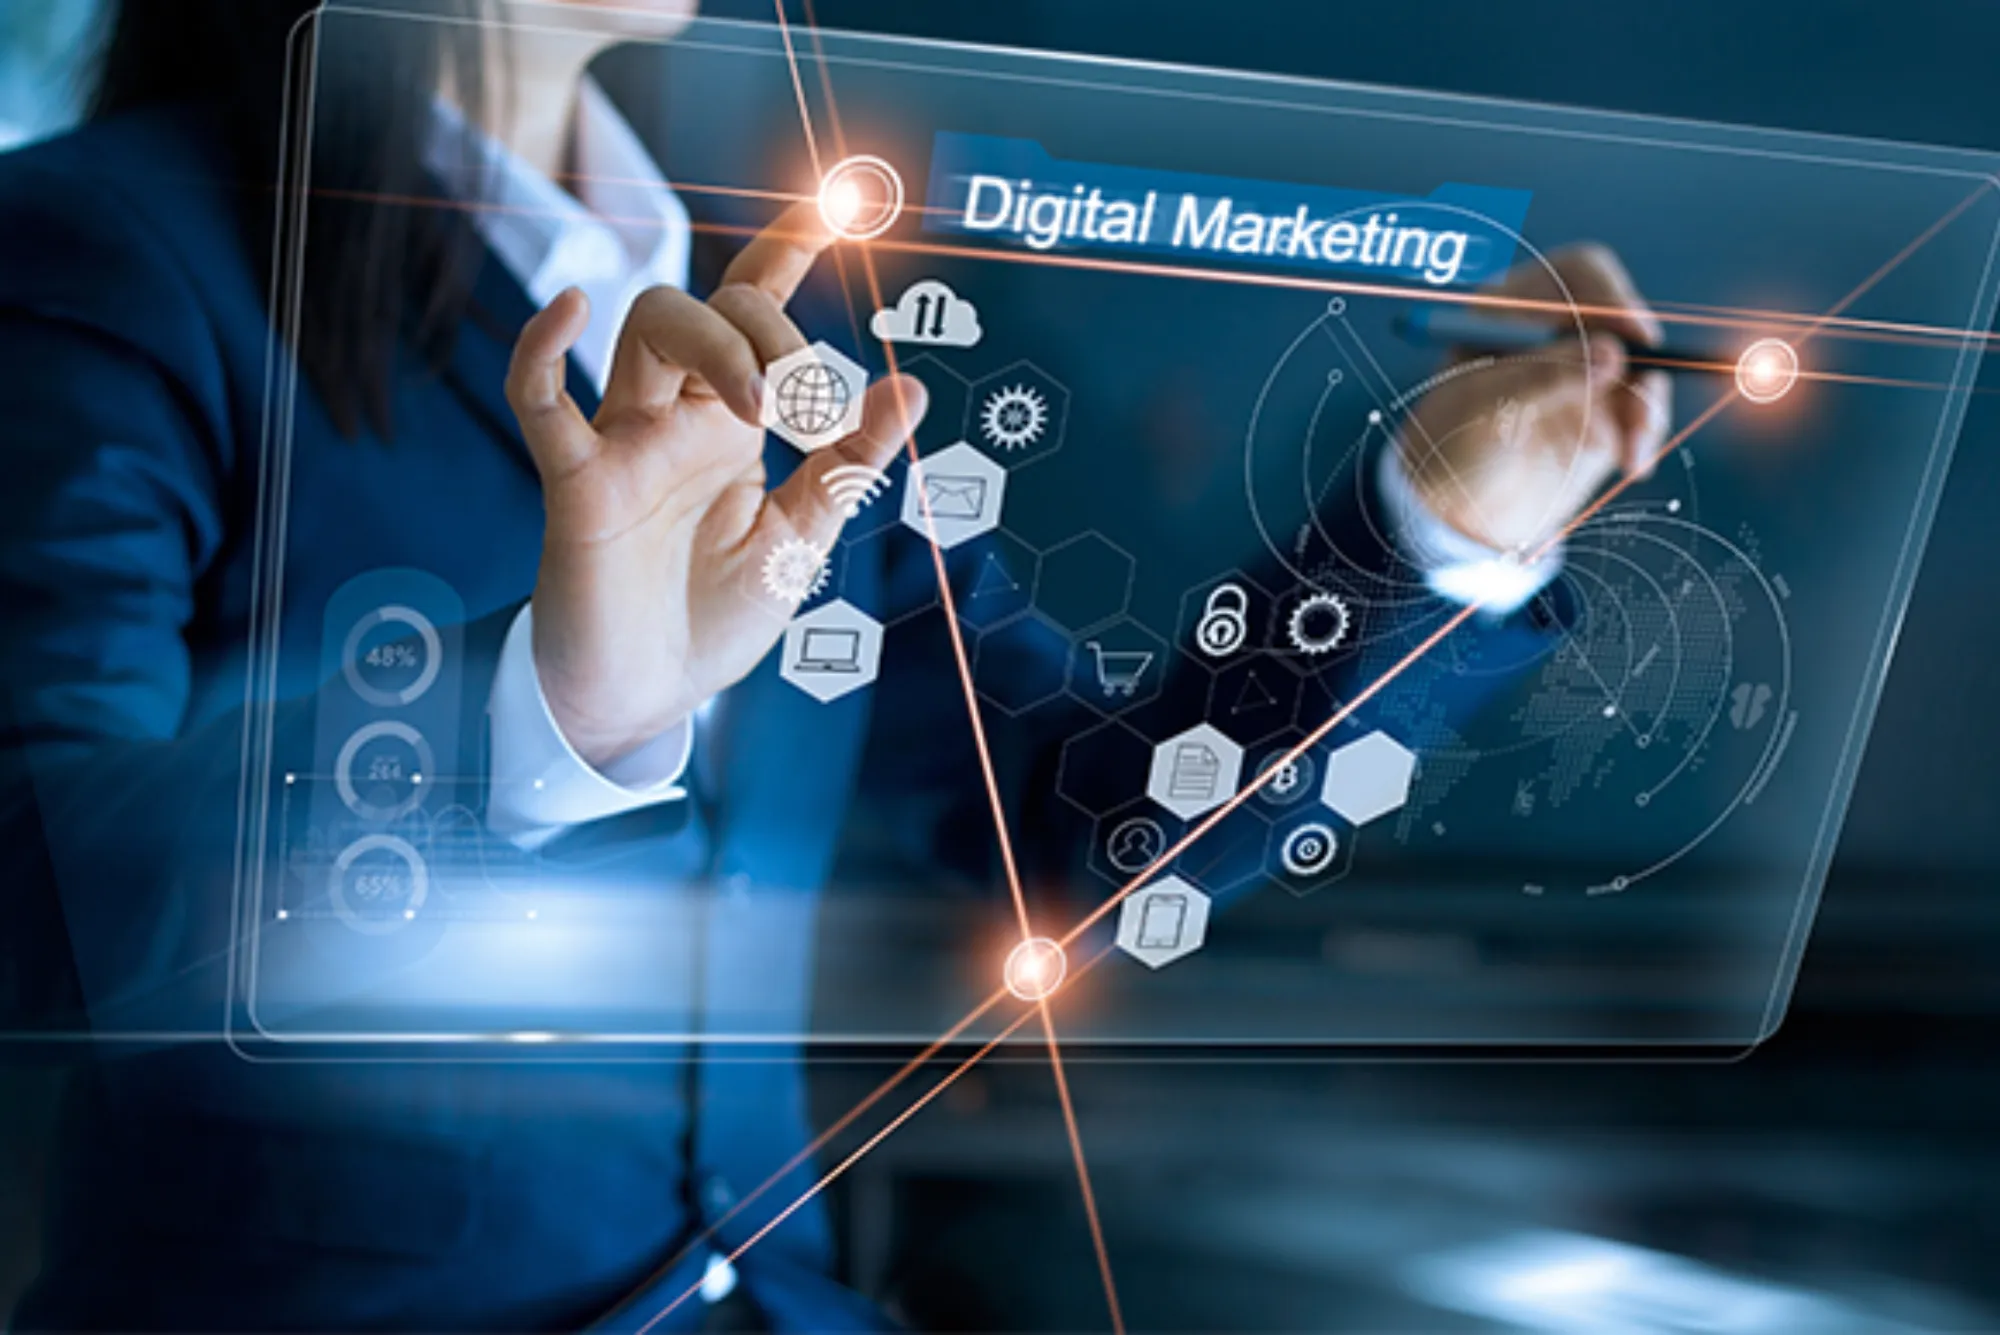 Digital Marketing Qualifications